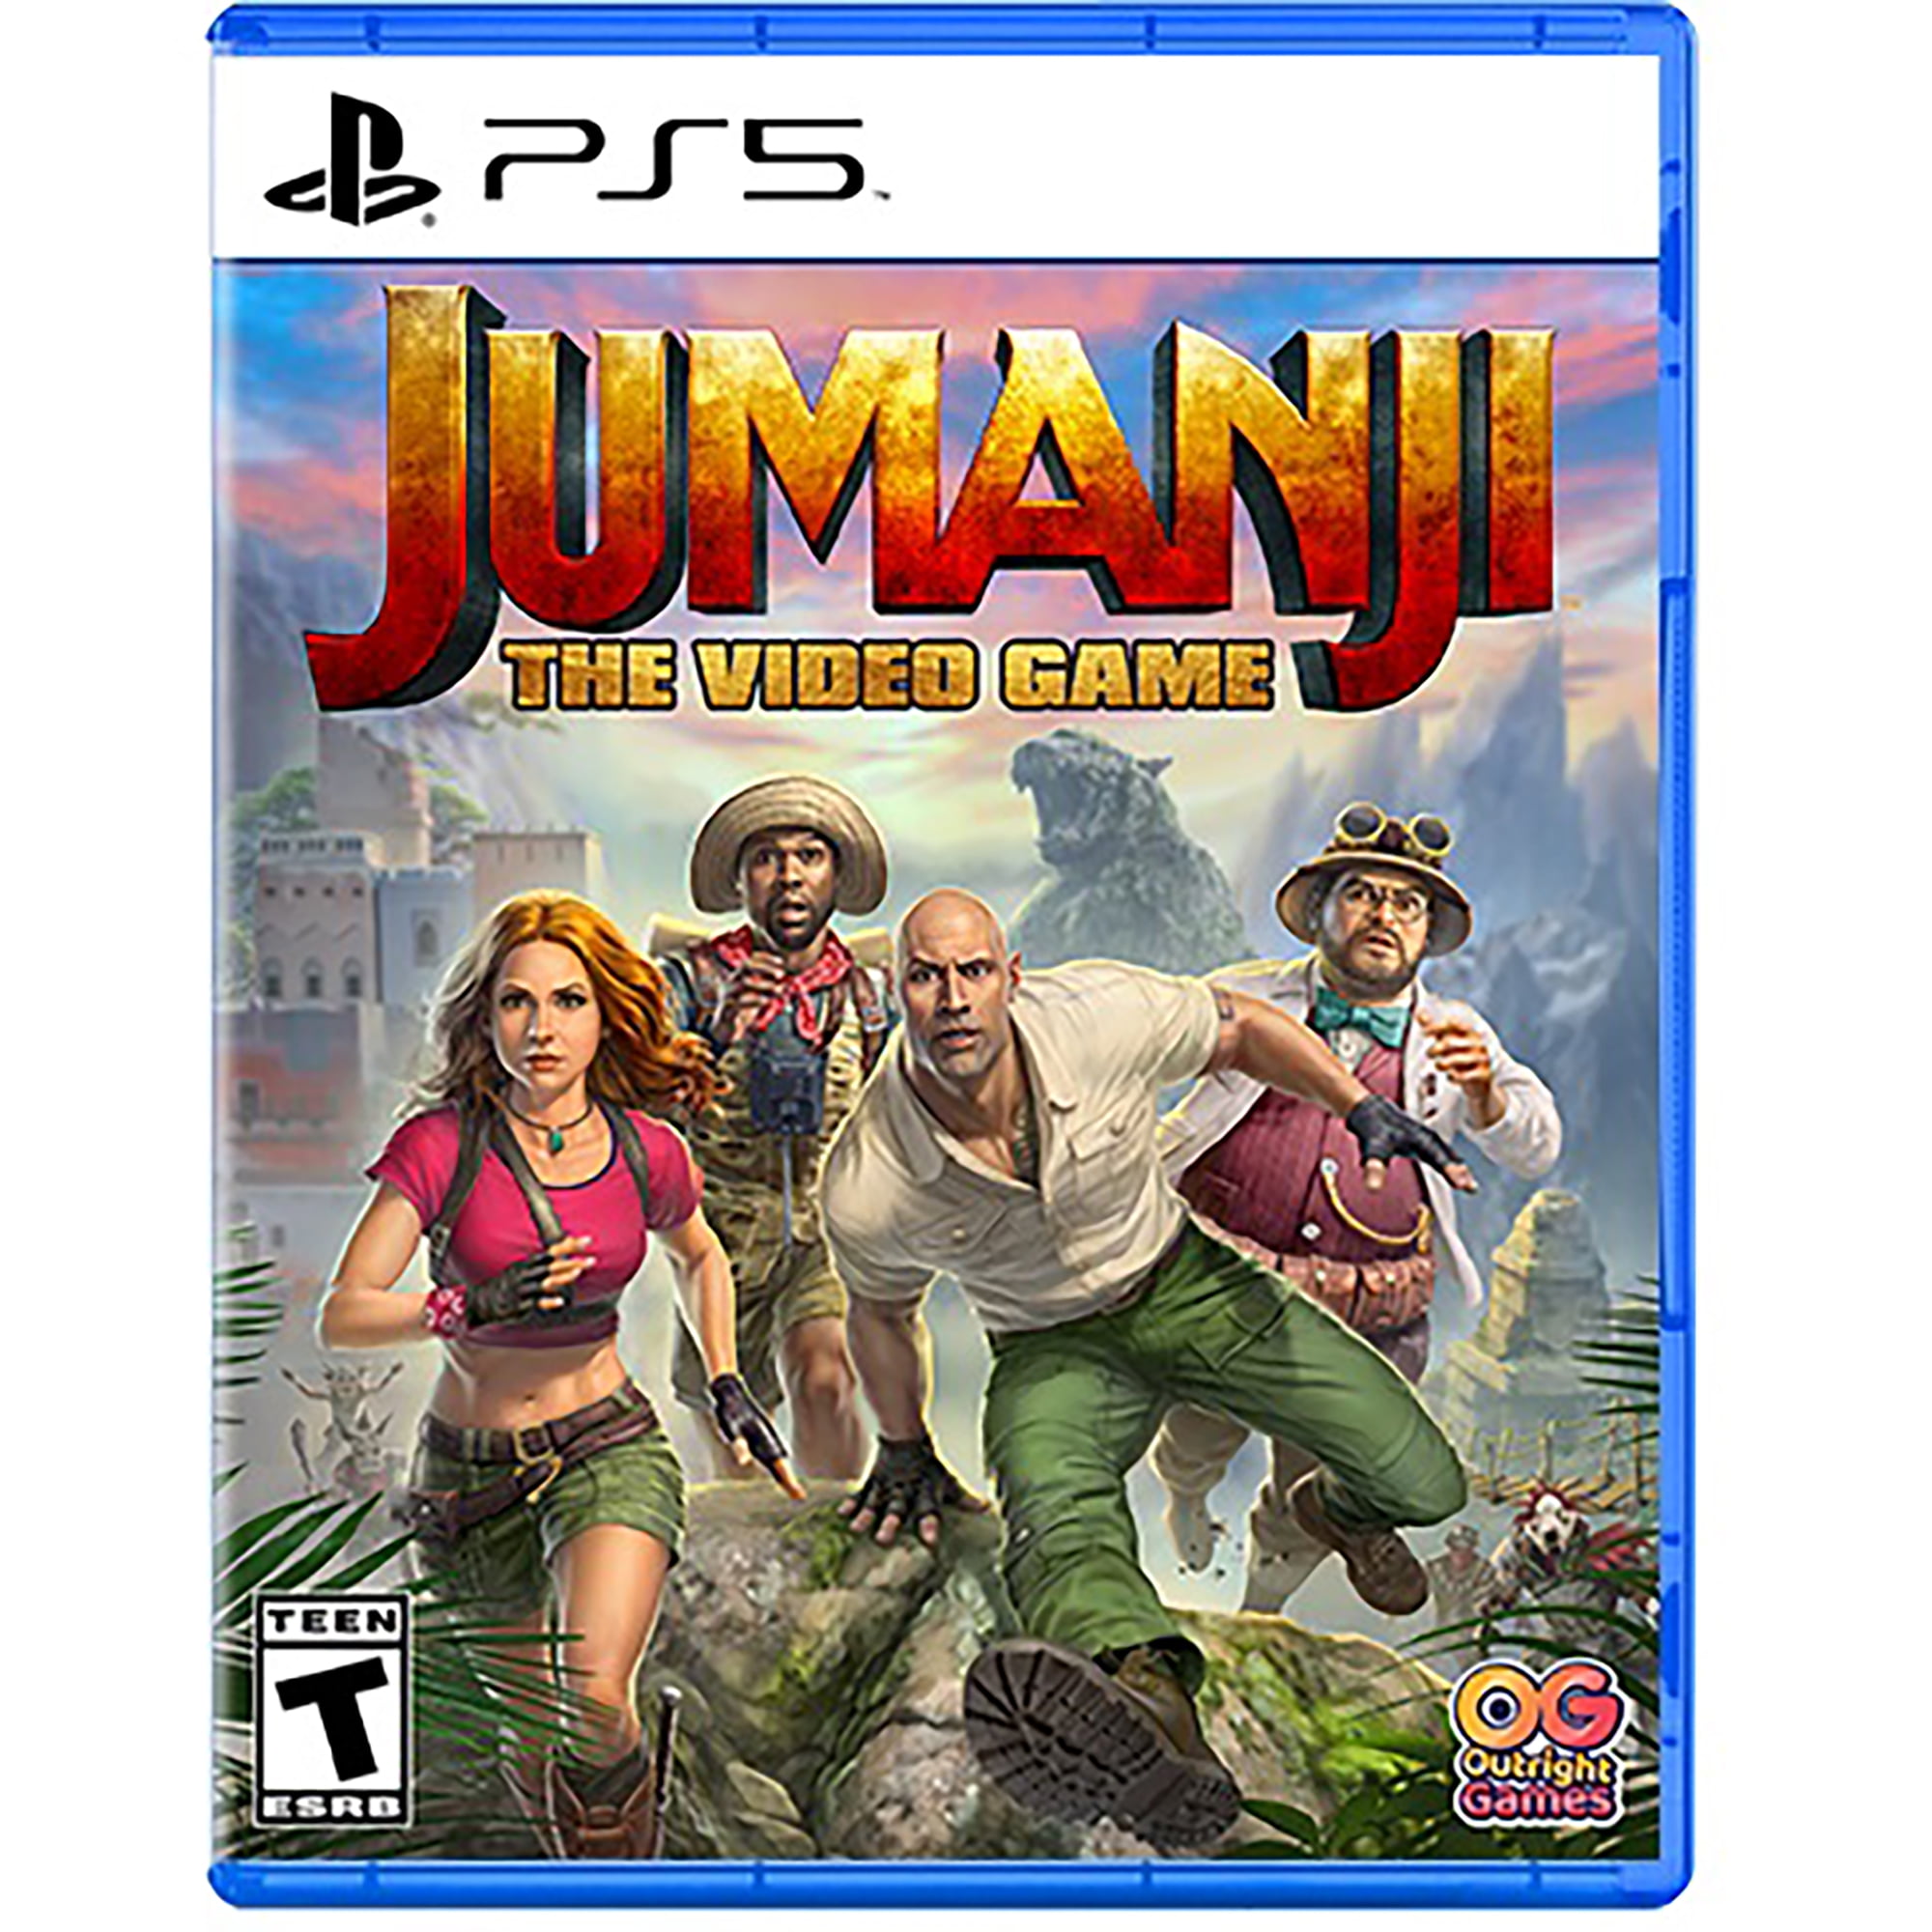 The PlayStation Video Game, 5 Jumanji: